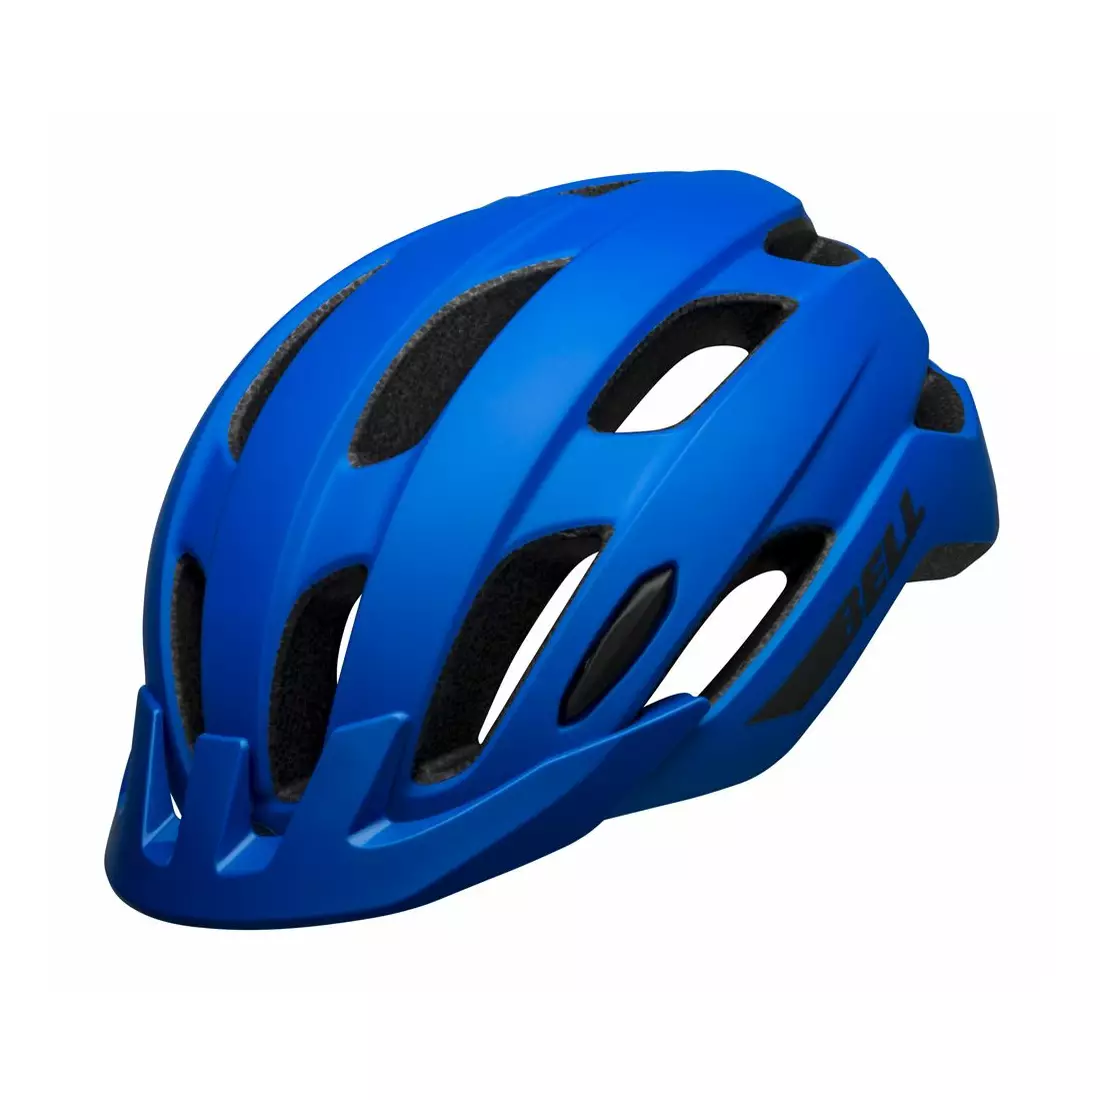 BELL TRACE helma na MTB kolo, matte blue